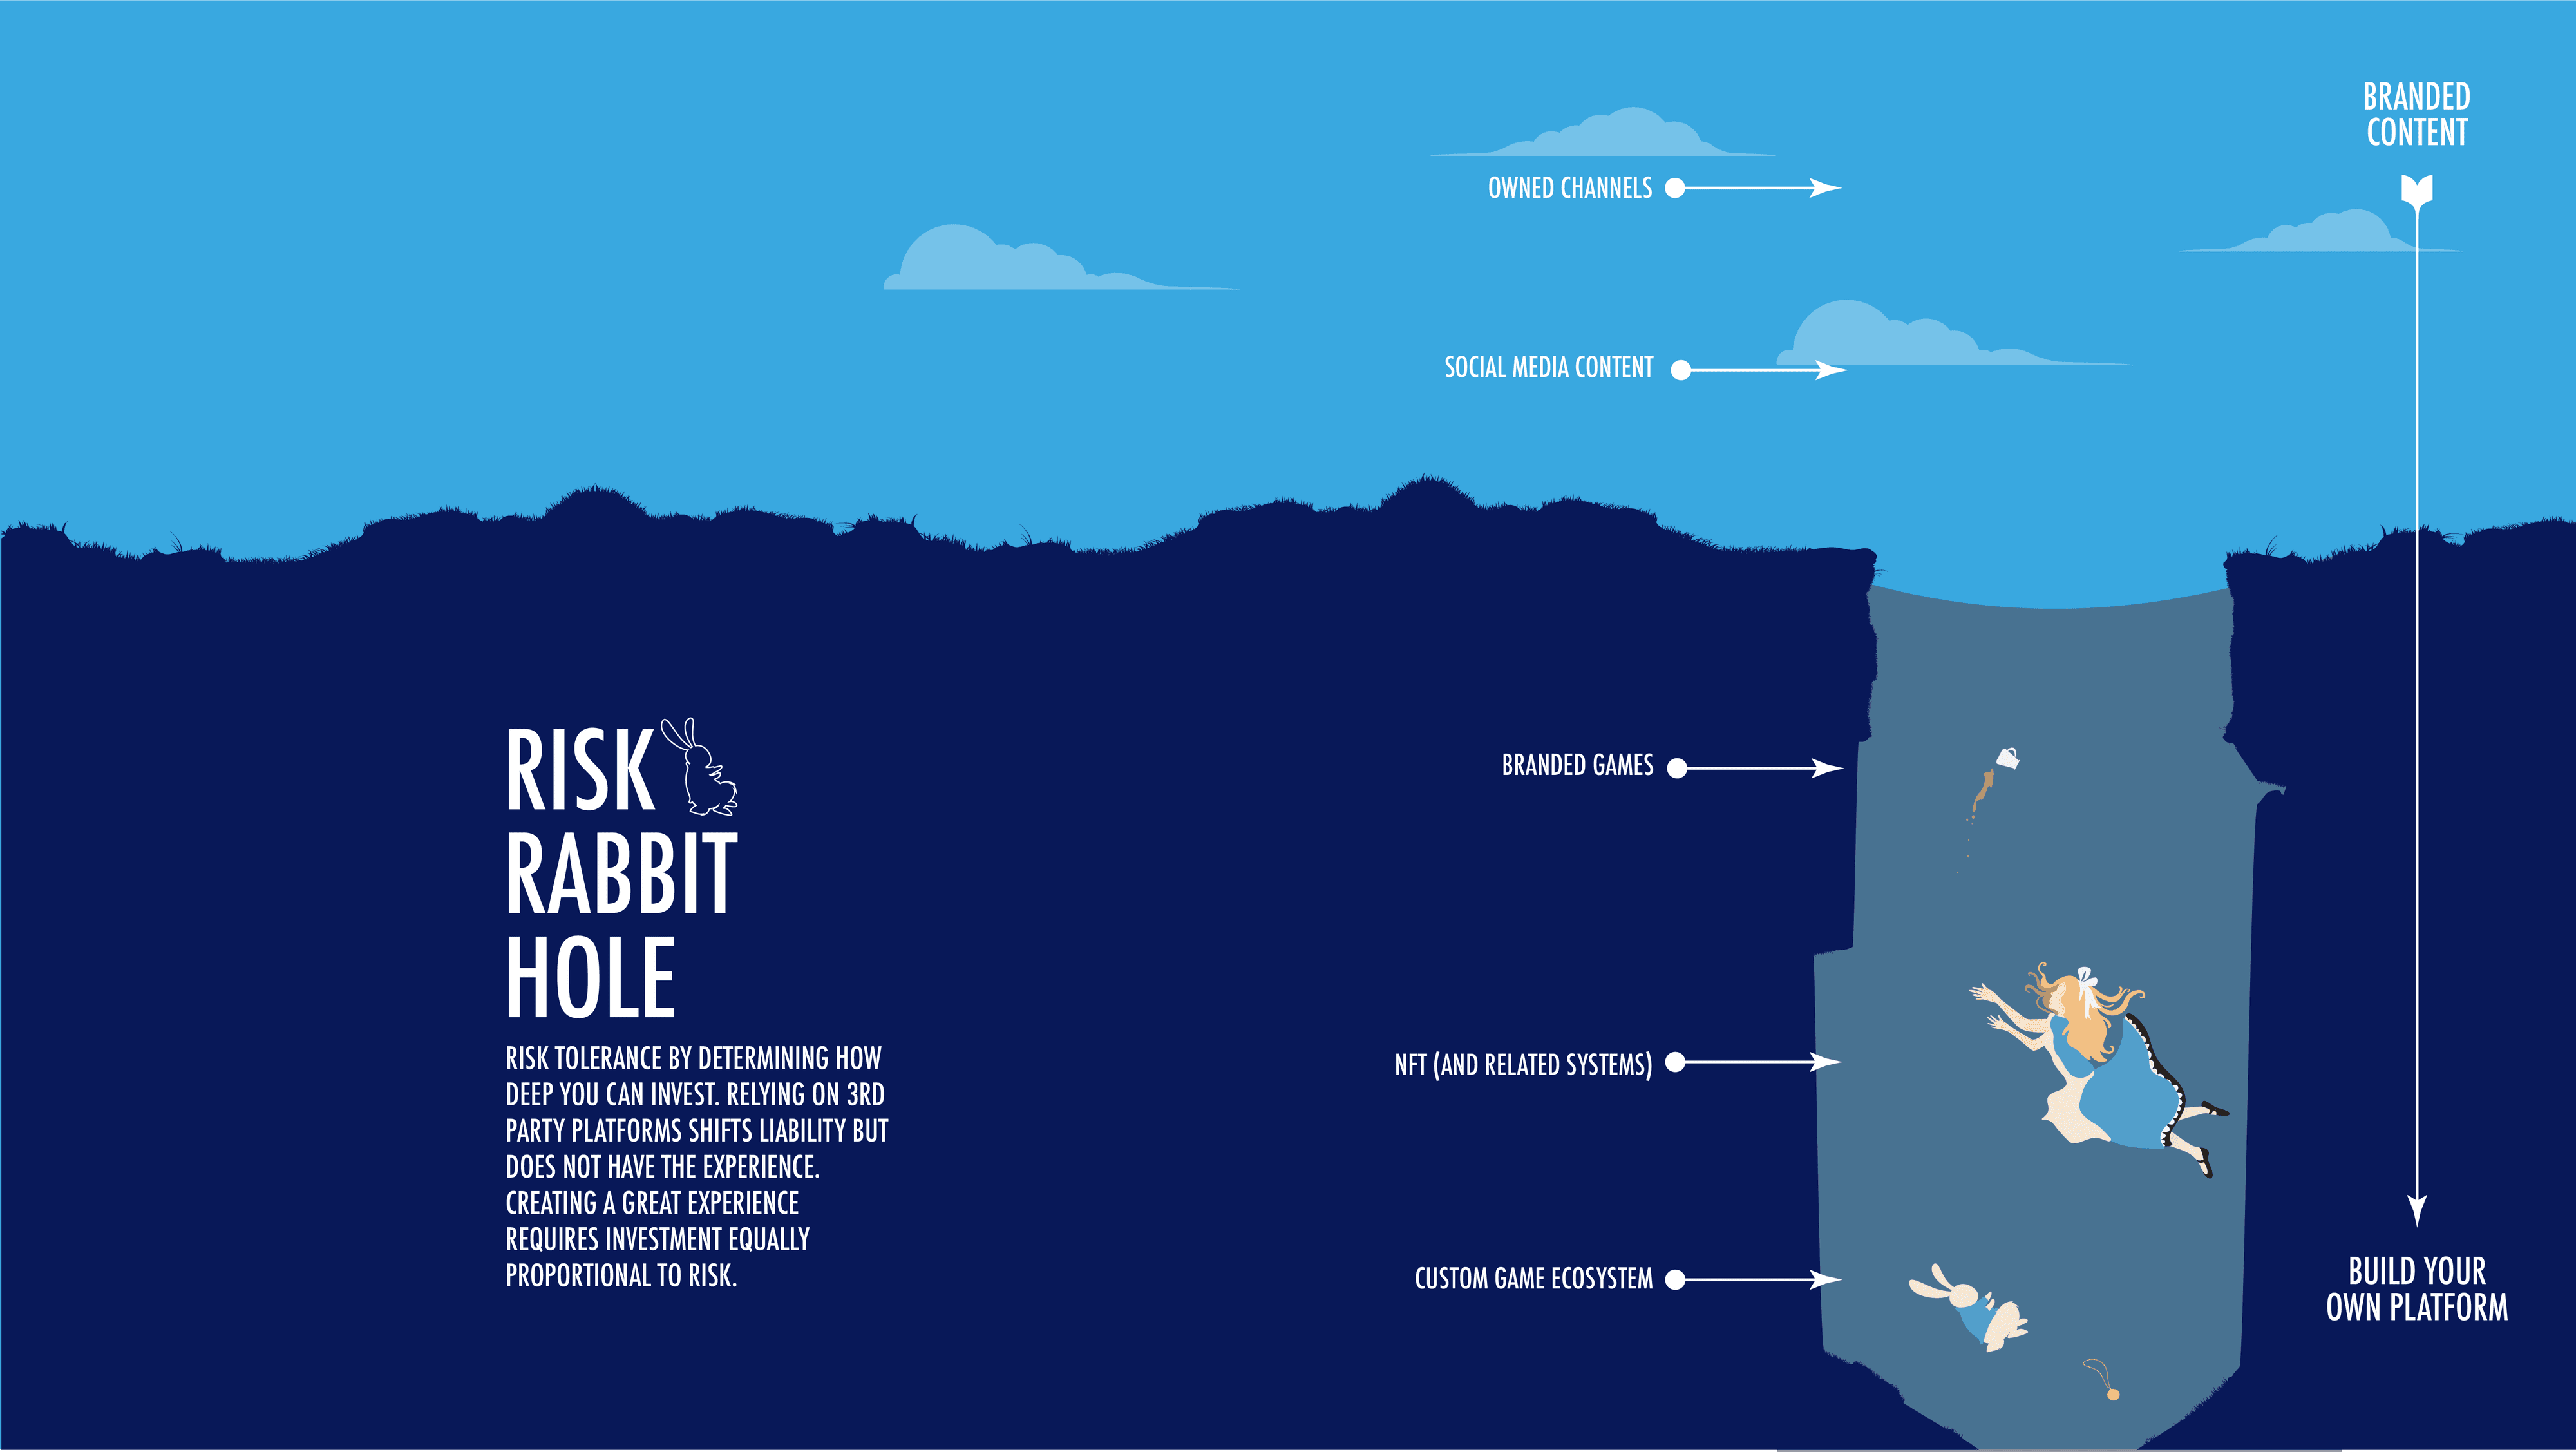 Risk Rabbit Hole Infographic v1.0a (16x9)